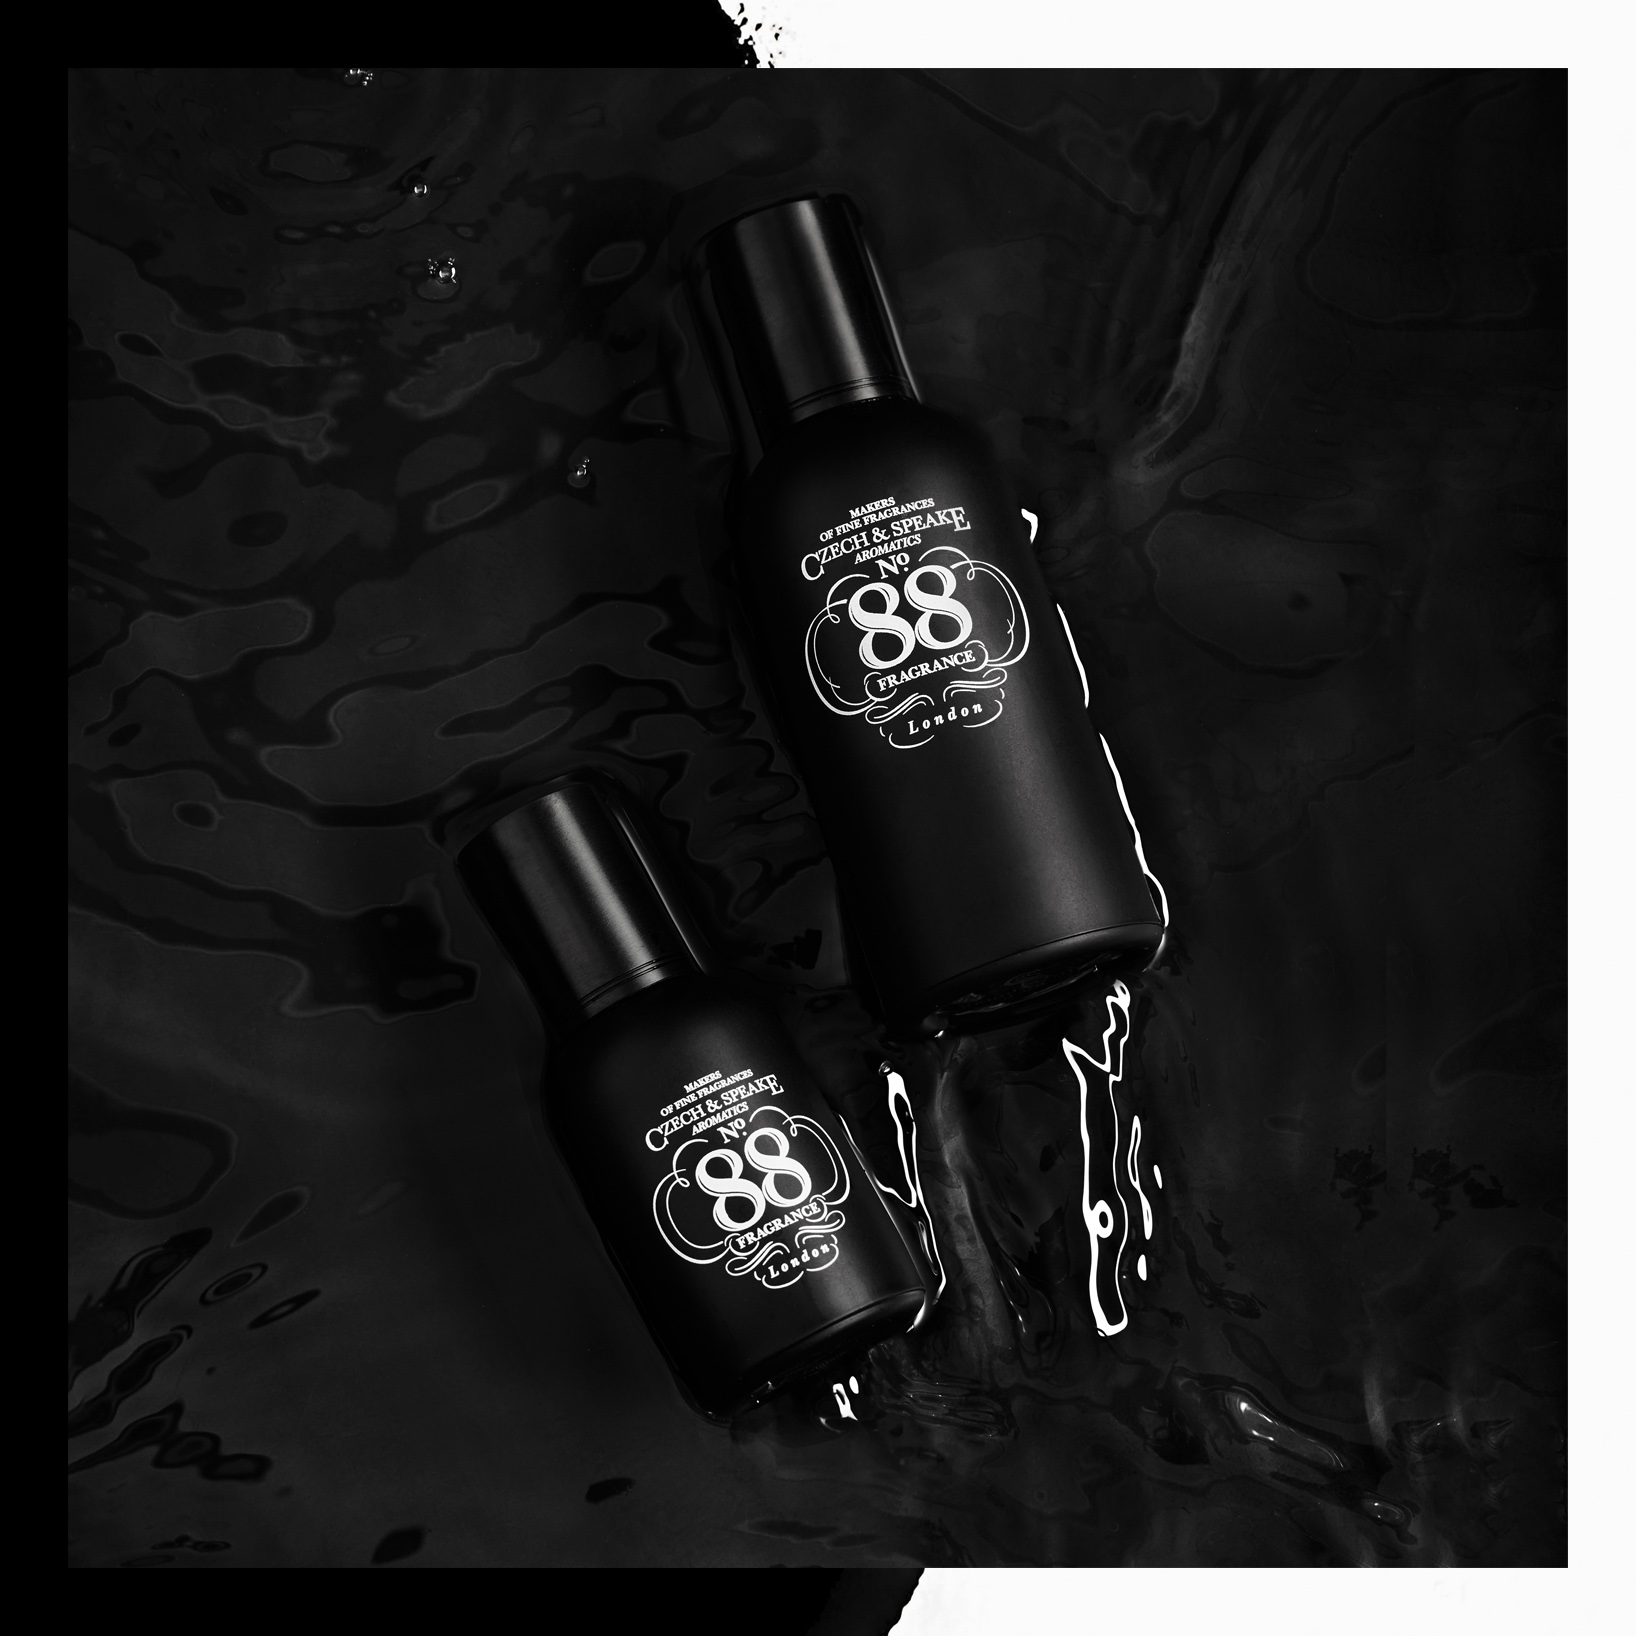 No.88 eau de parfum 100ml and 50ml in black liquid- a Fine, woody floral fragrance 